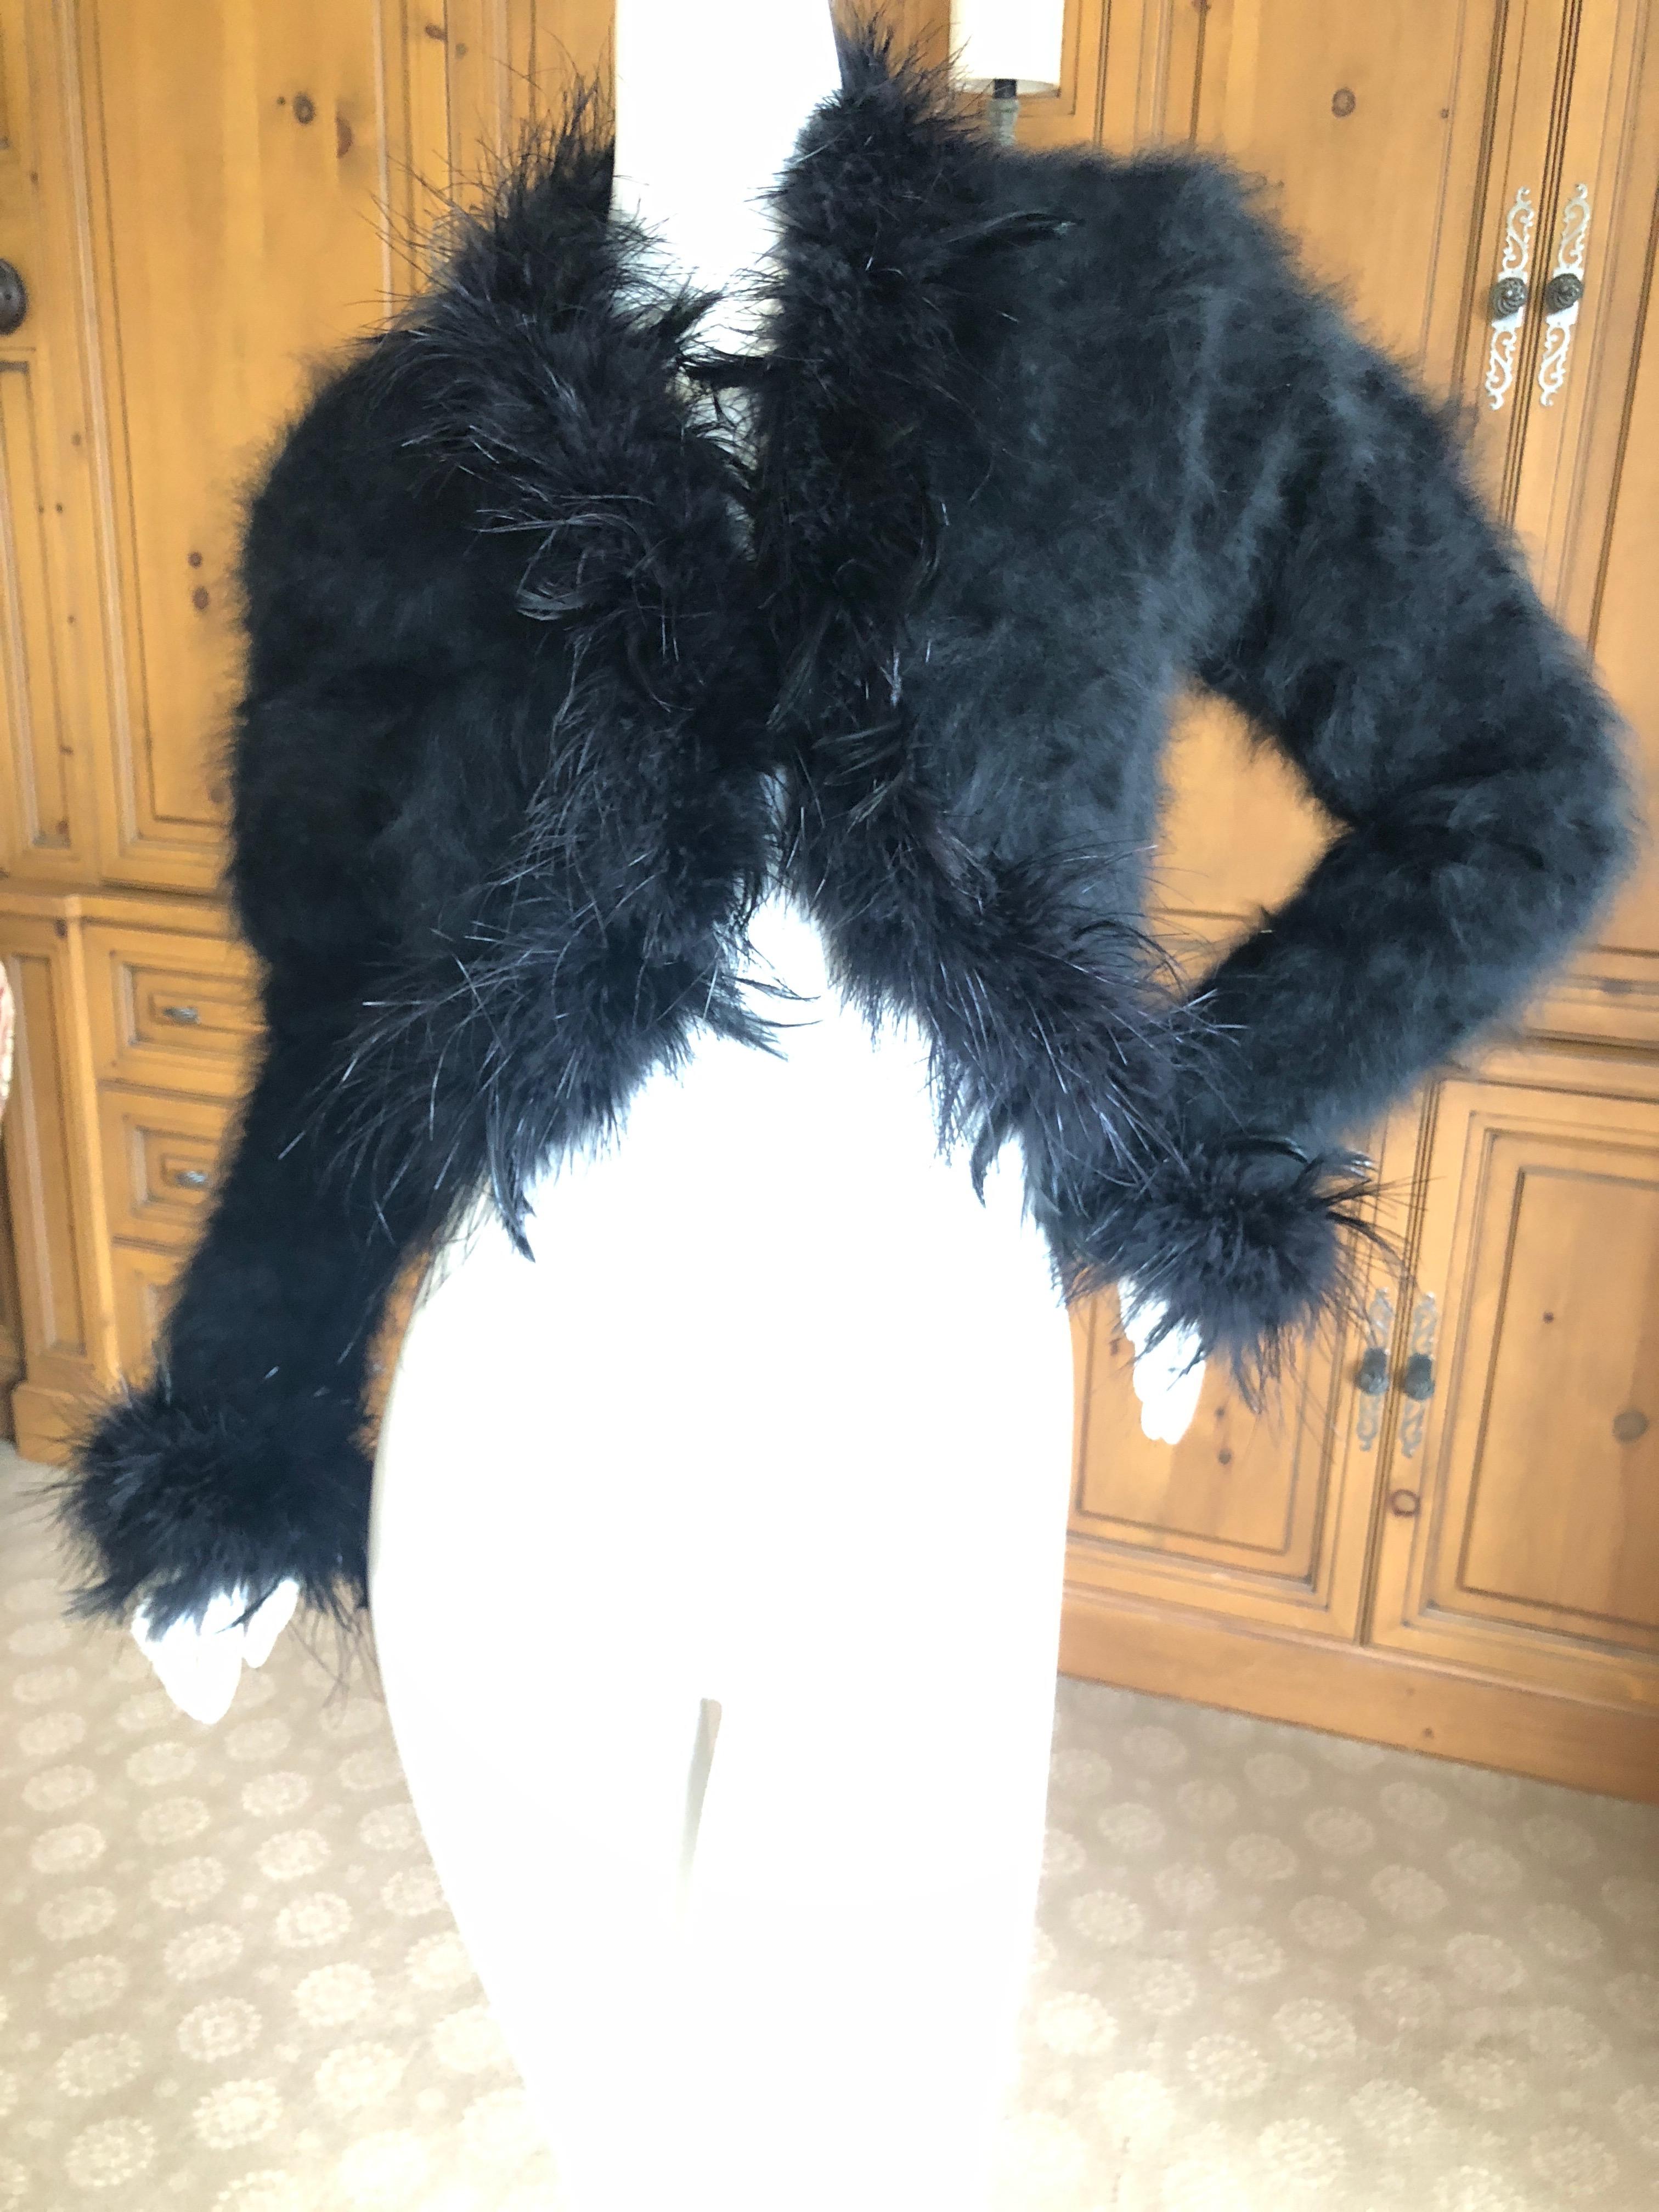 Yves Saint Laurent Rive Guache 1970's Black Fuzzy Mohair Feather Trim Jacket.
So chic, so soft.
 Size 36
 Bust 36